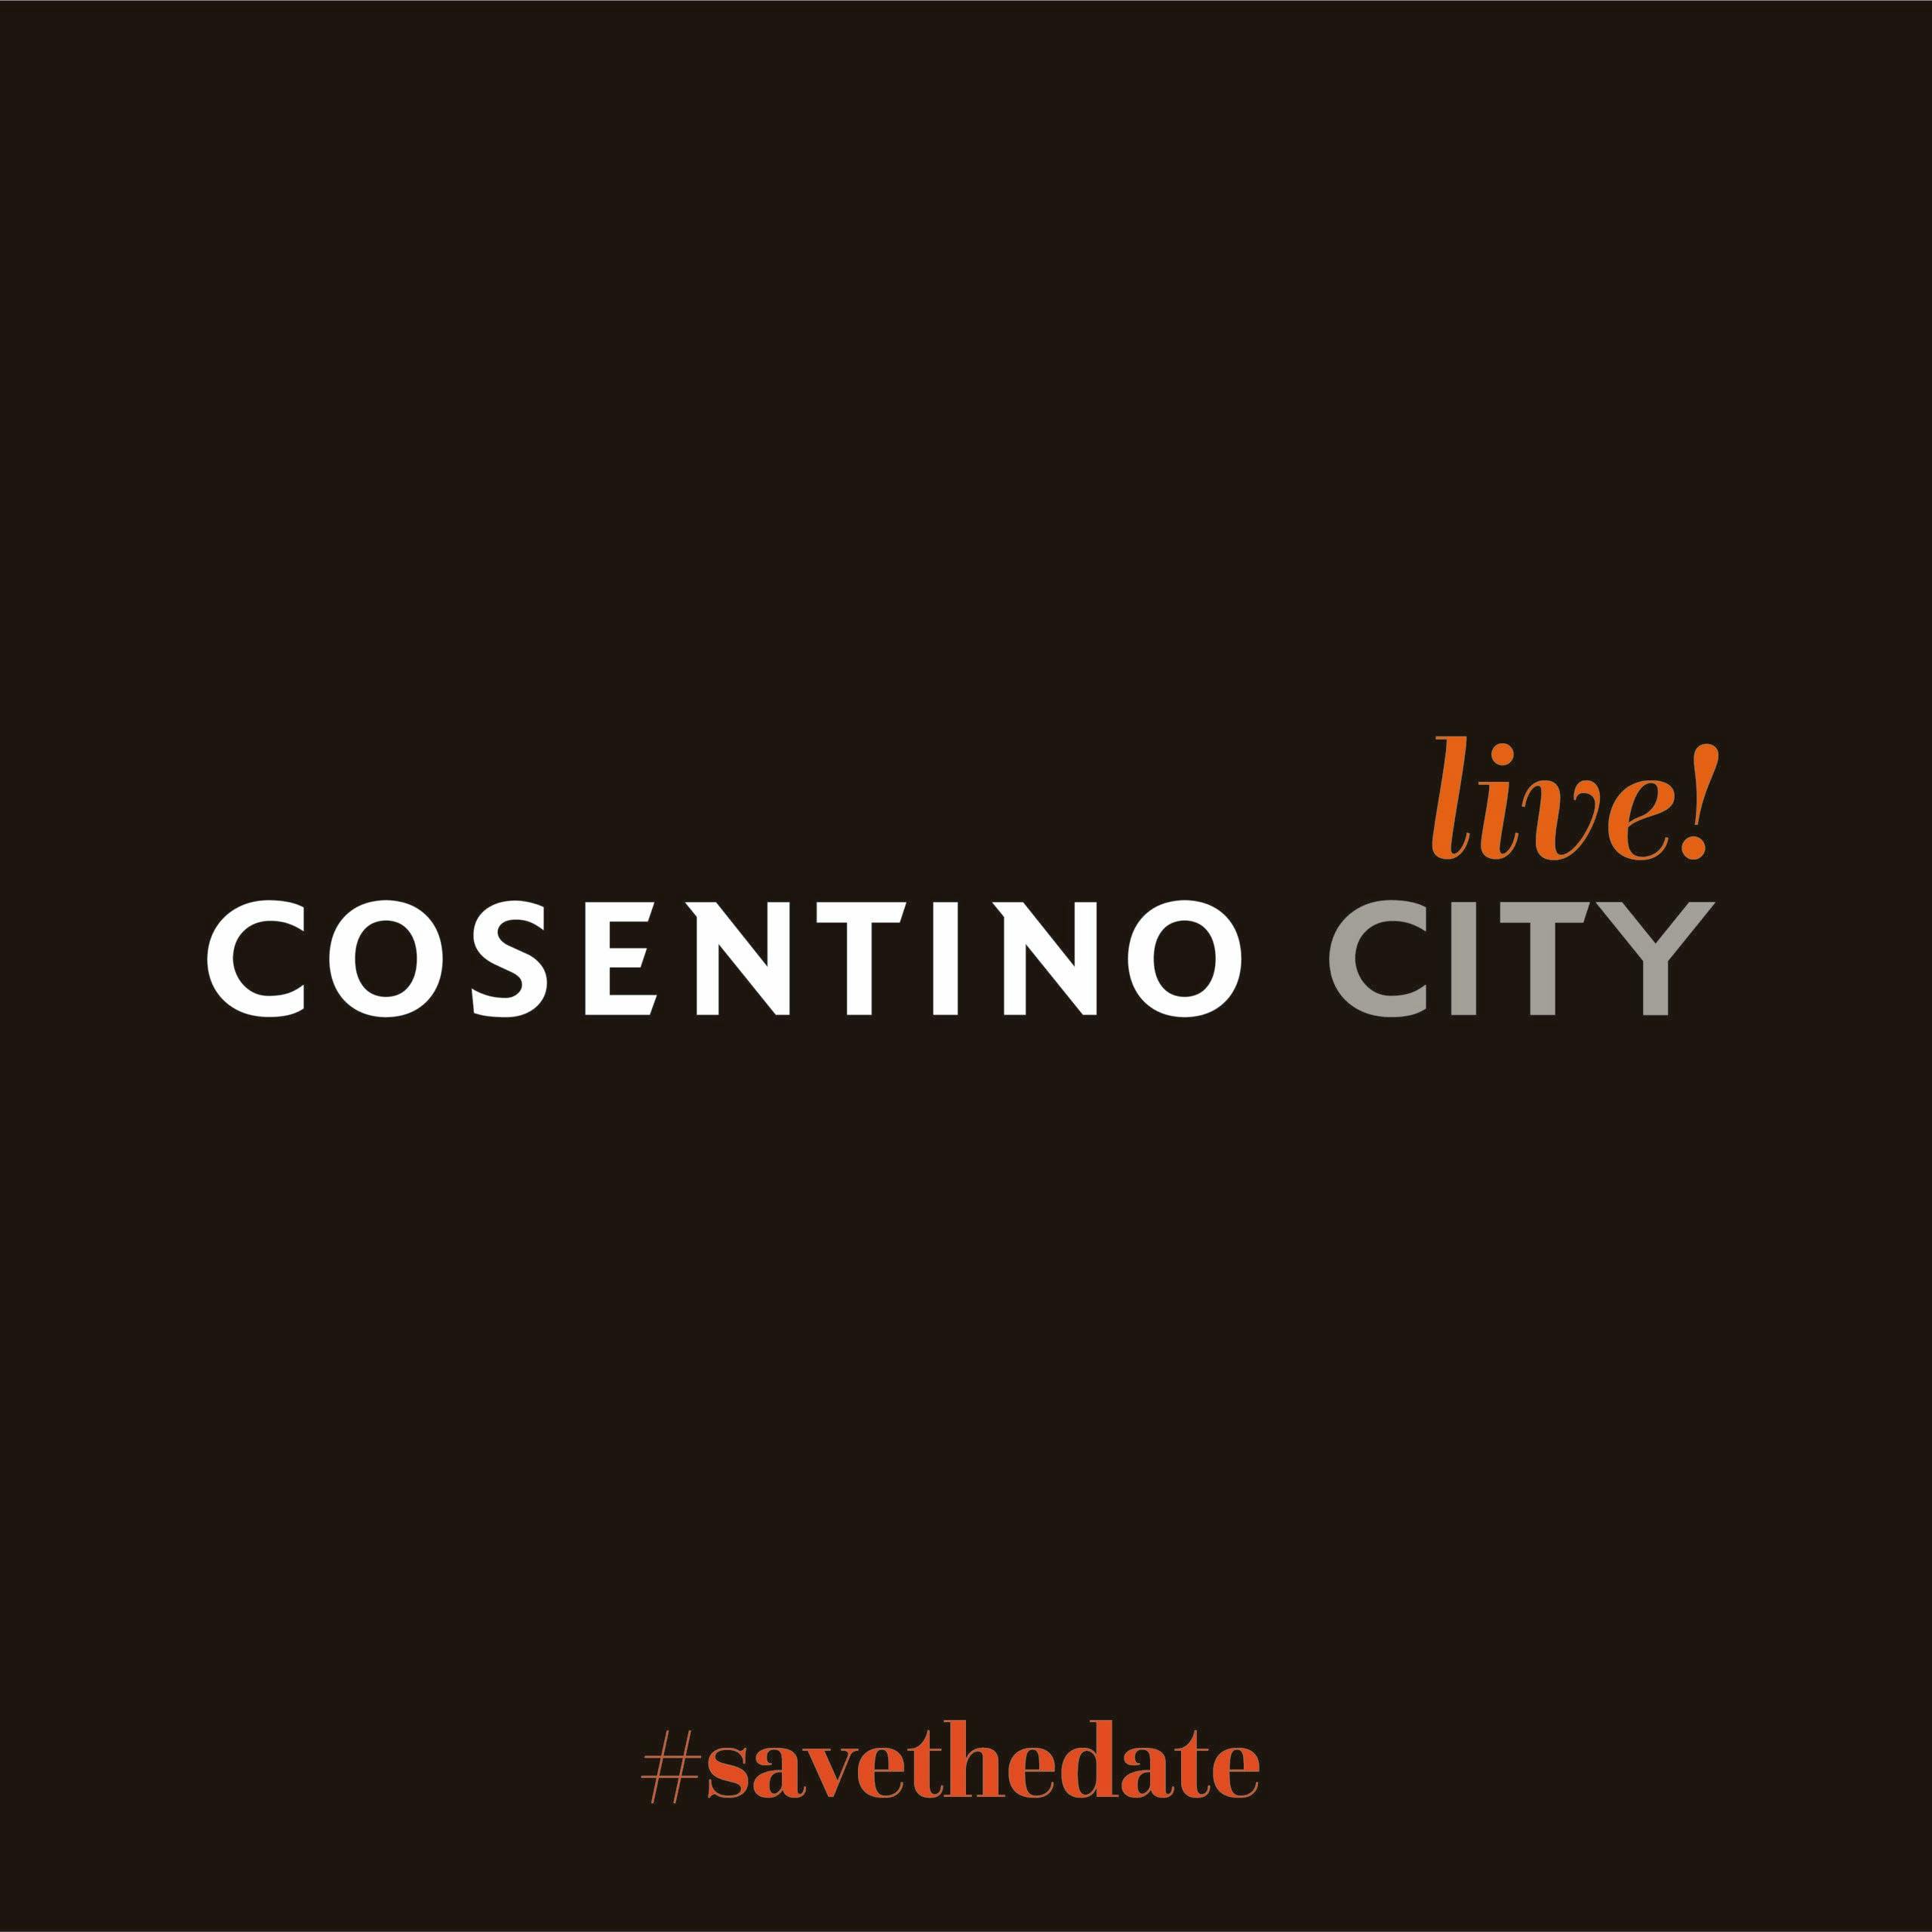 Numéro d'image 32 de la section actuelle de Cosentino lance une série de vidéos inspirantes Cosentino City Live! de Cosentino Canada